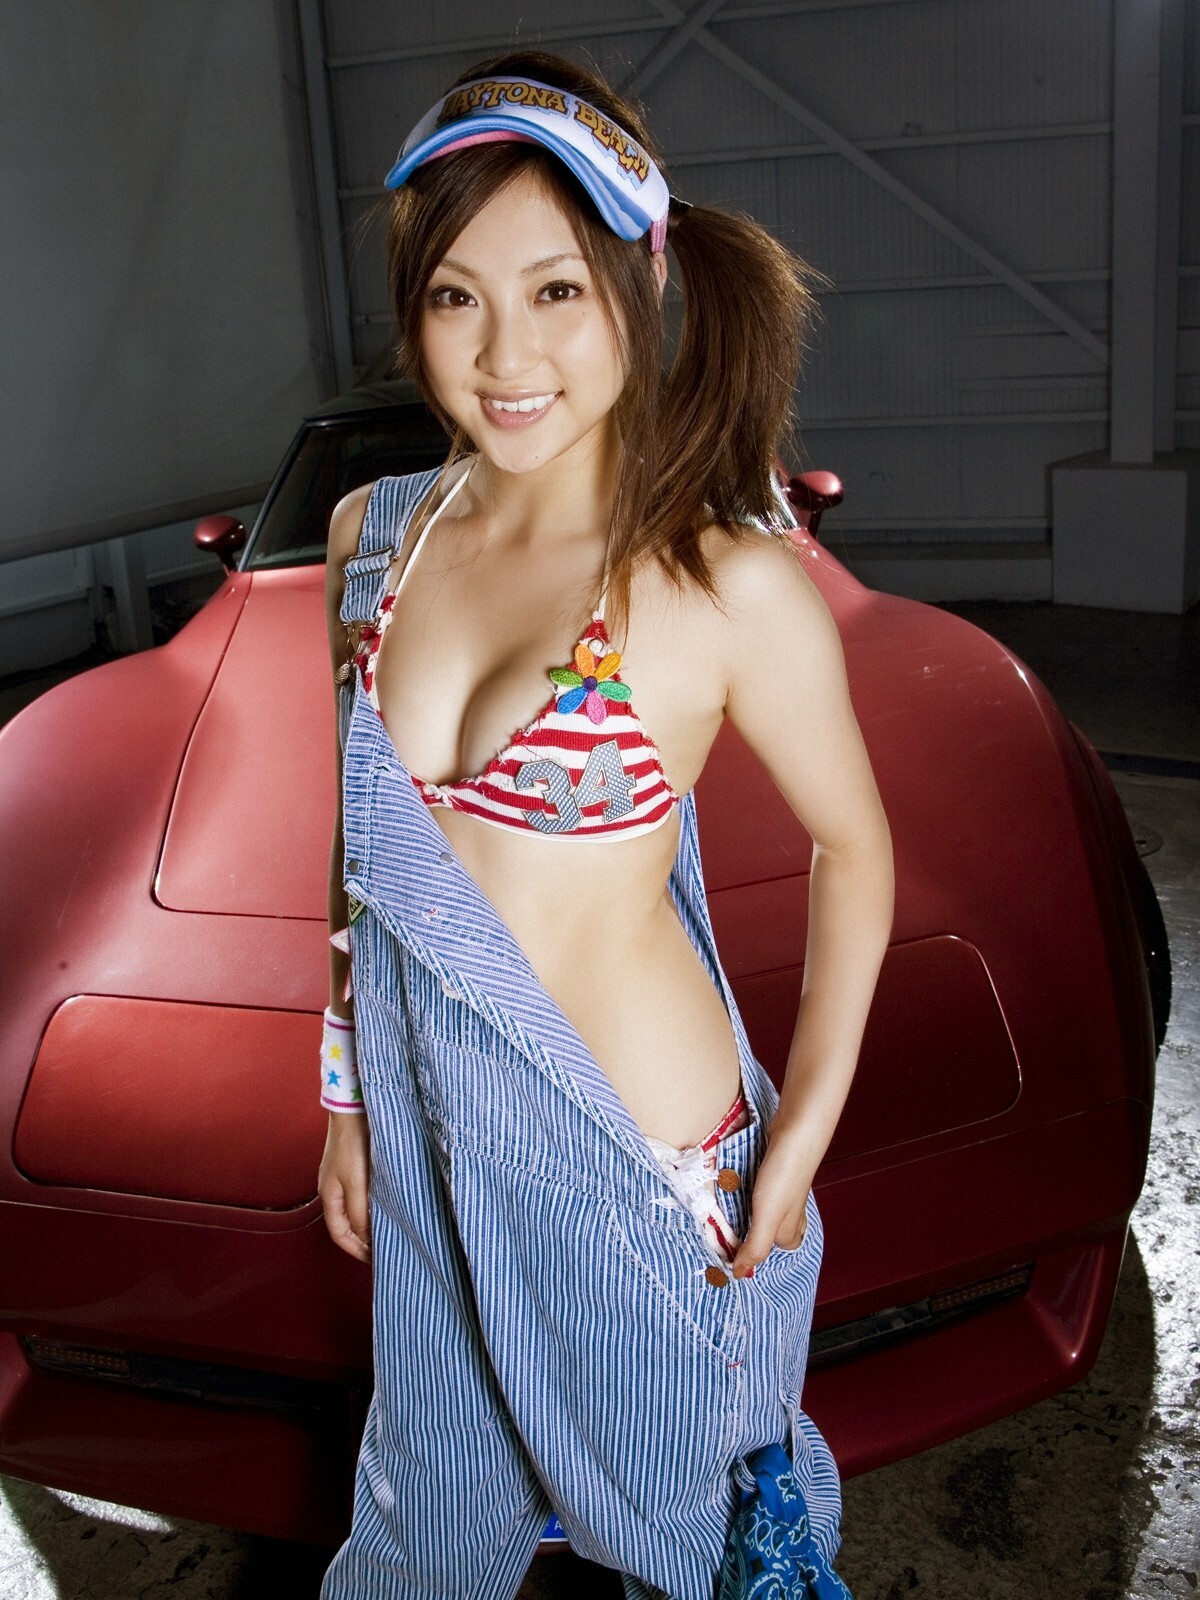 Tatsumi natsuko sabranet 070110 pictures of sexy Japanese women